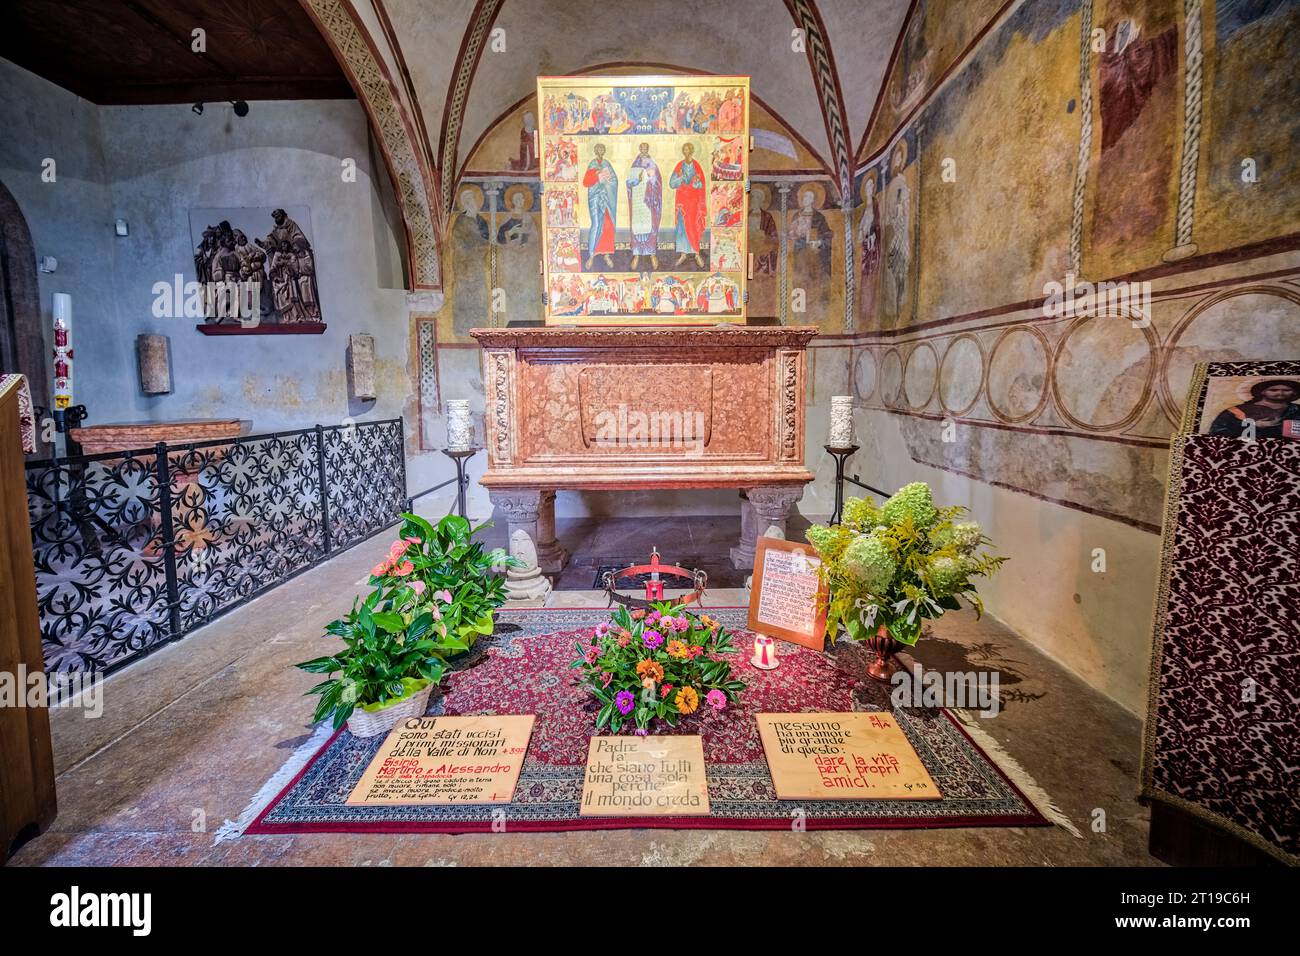 The Chapel of the Holy Martyrs inside the church Basilica dei Santi Martiri dell'Anaunia. Stock Photo